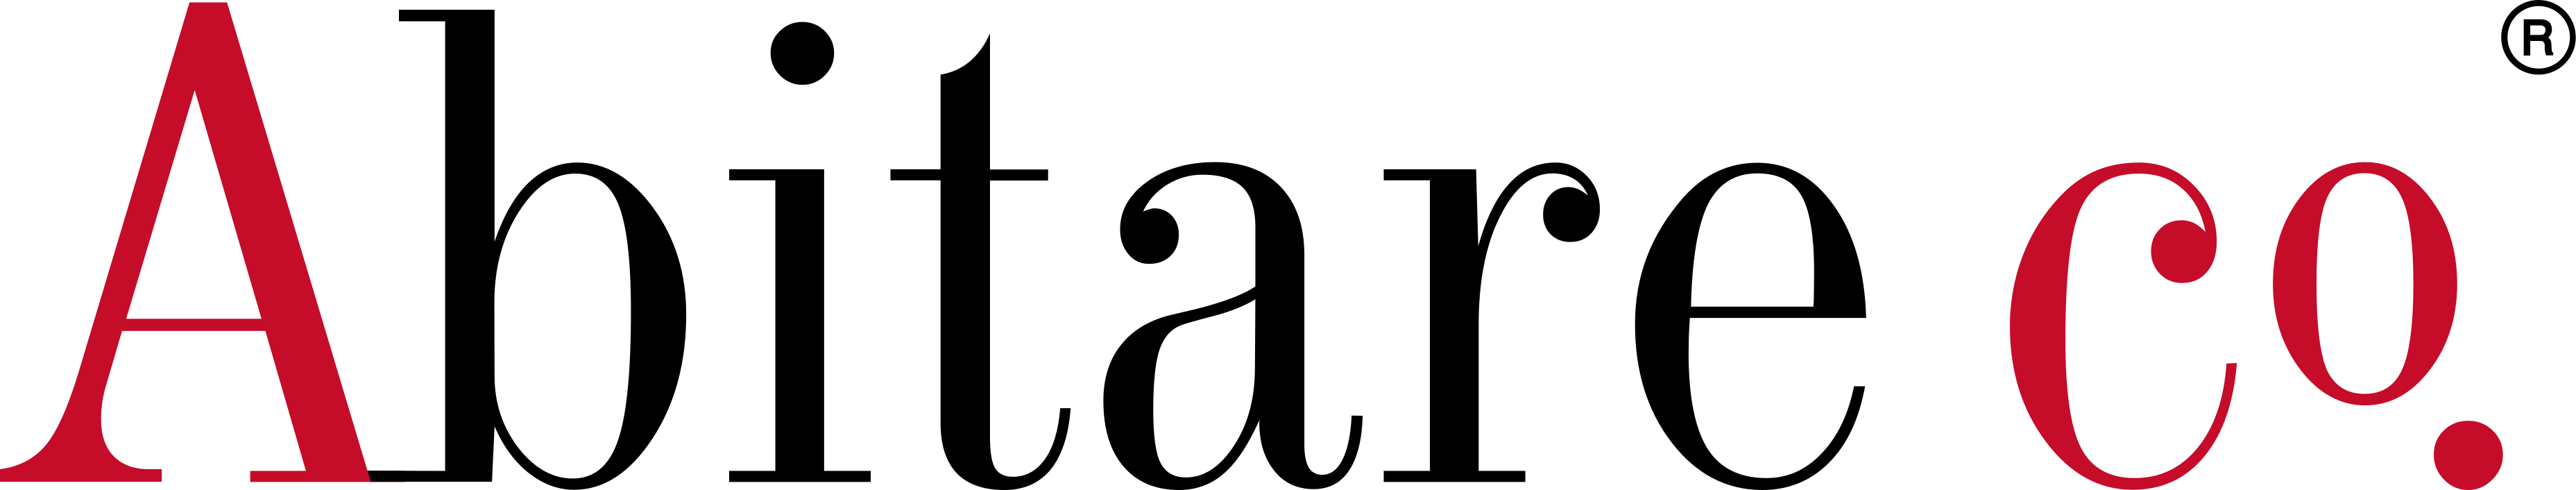 AbitareCo Logo 1